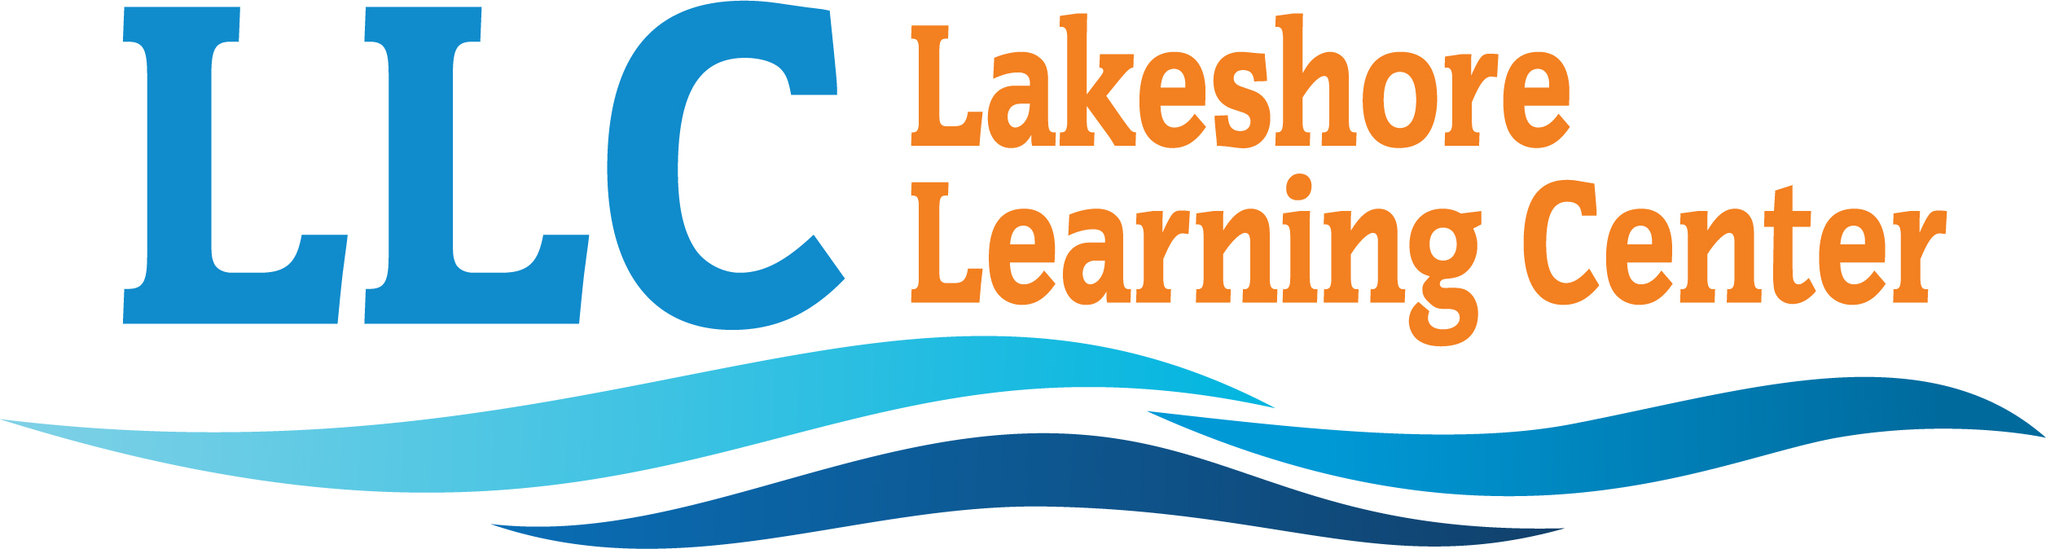 Lakeshore Learning Center logo